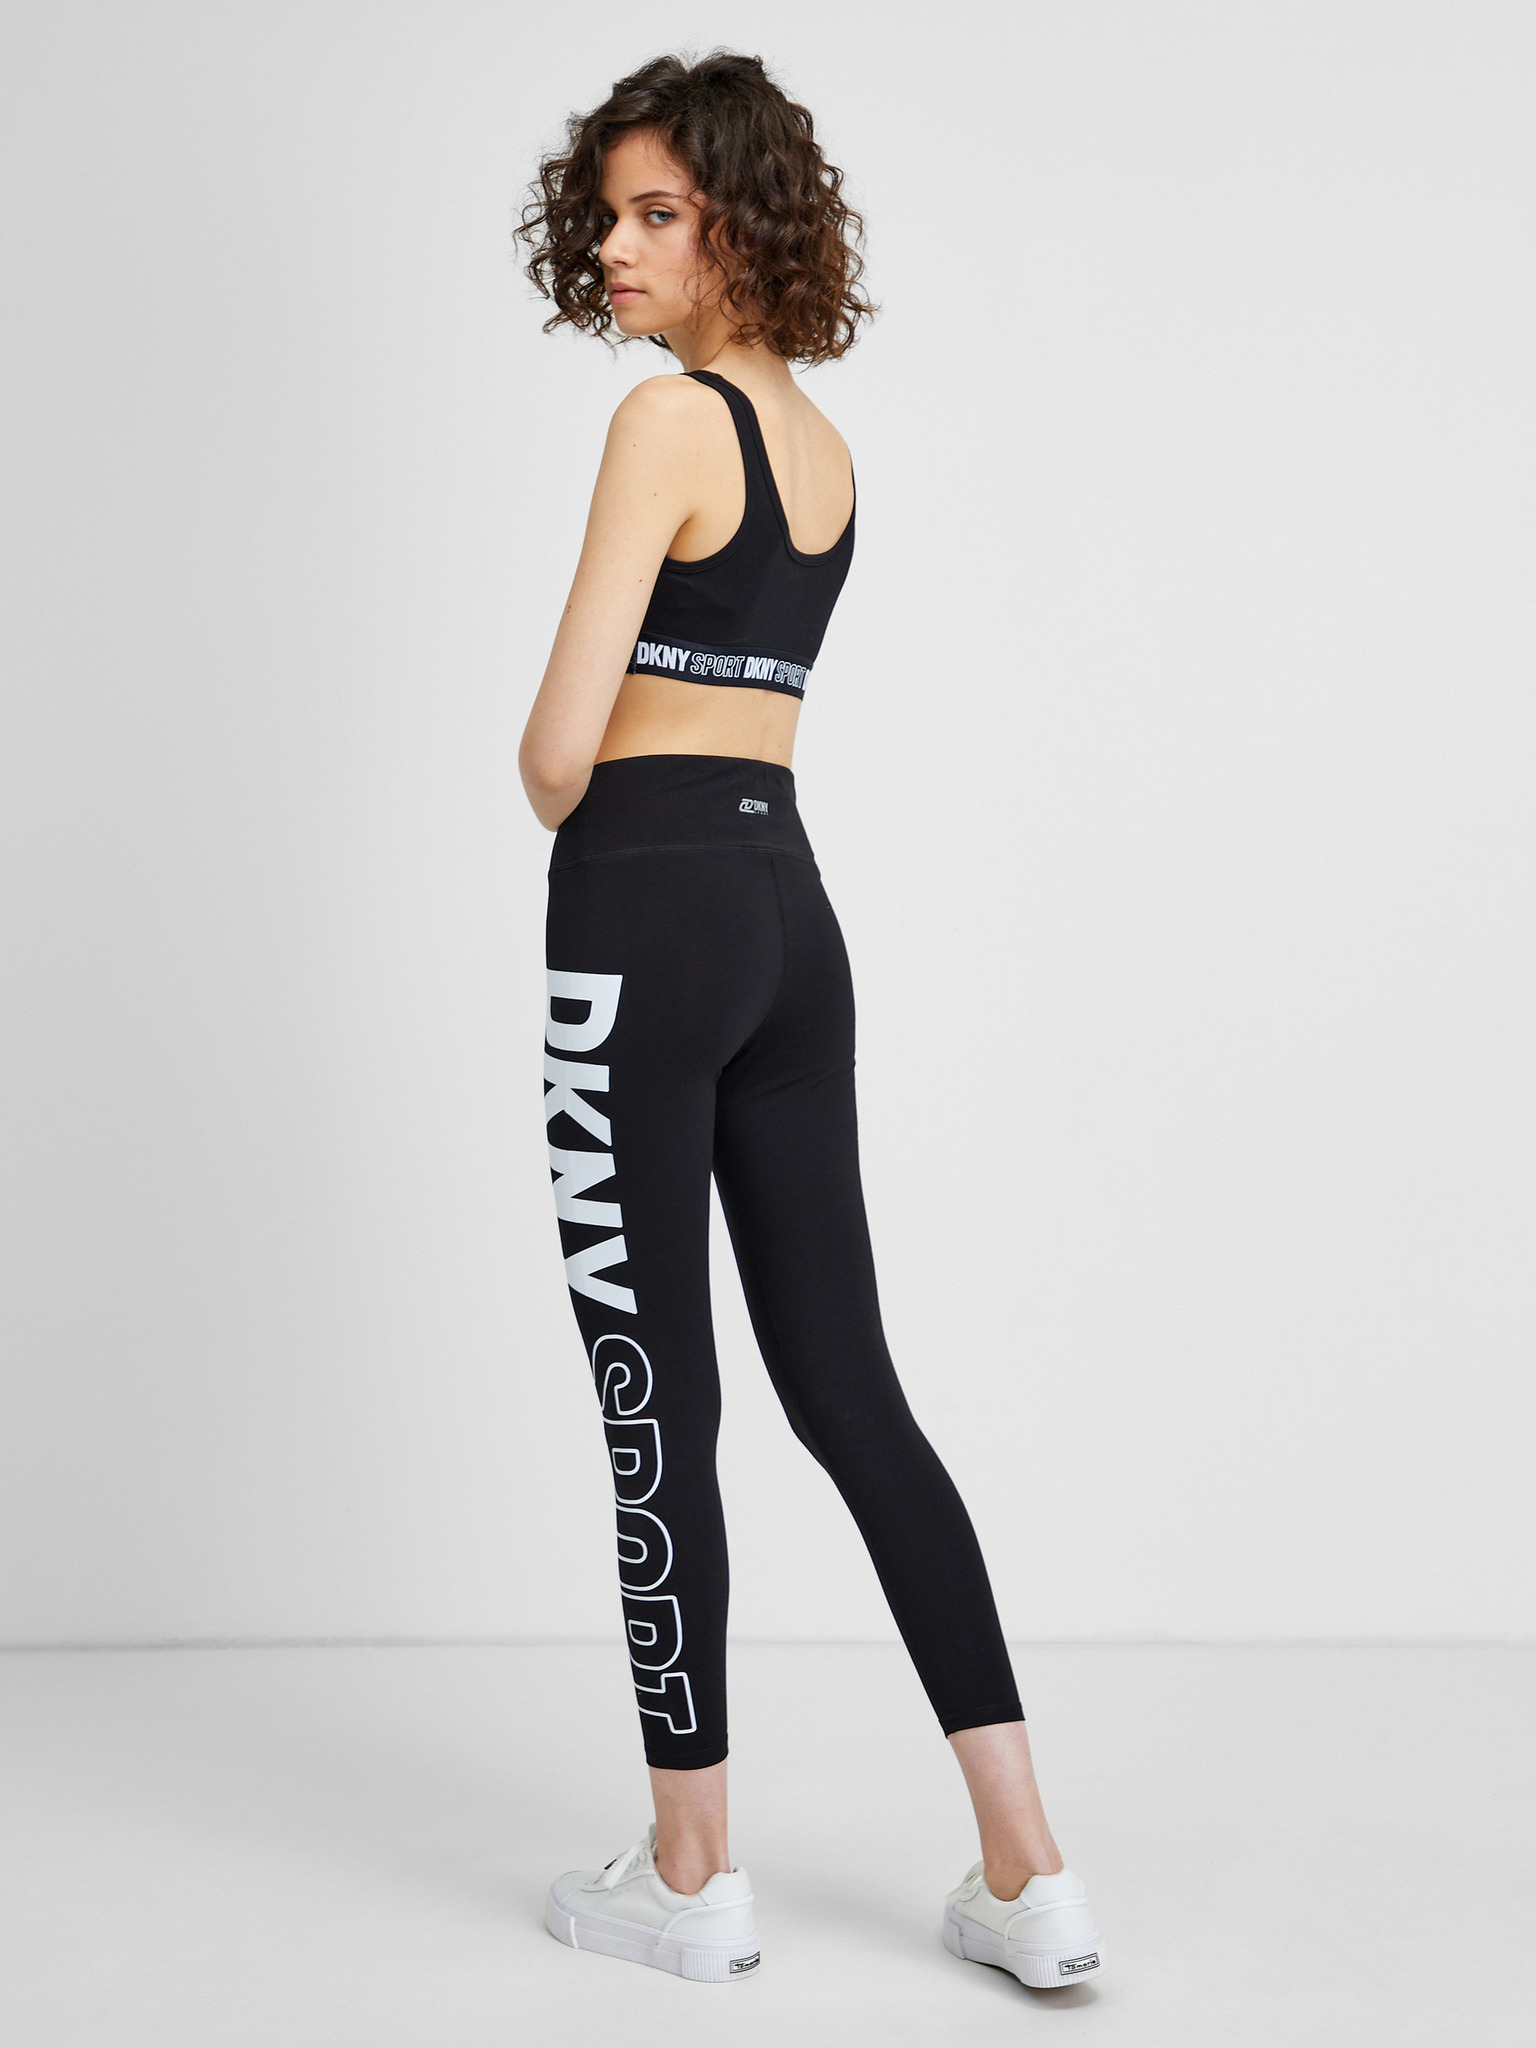 DKNY Womens Athleather Faux Leather Sports Bra,Black,Medium  Cropped  sports leggings, Black sports bra, Low impact sports bra